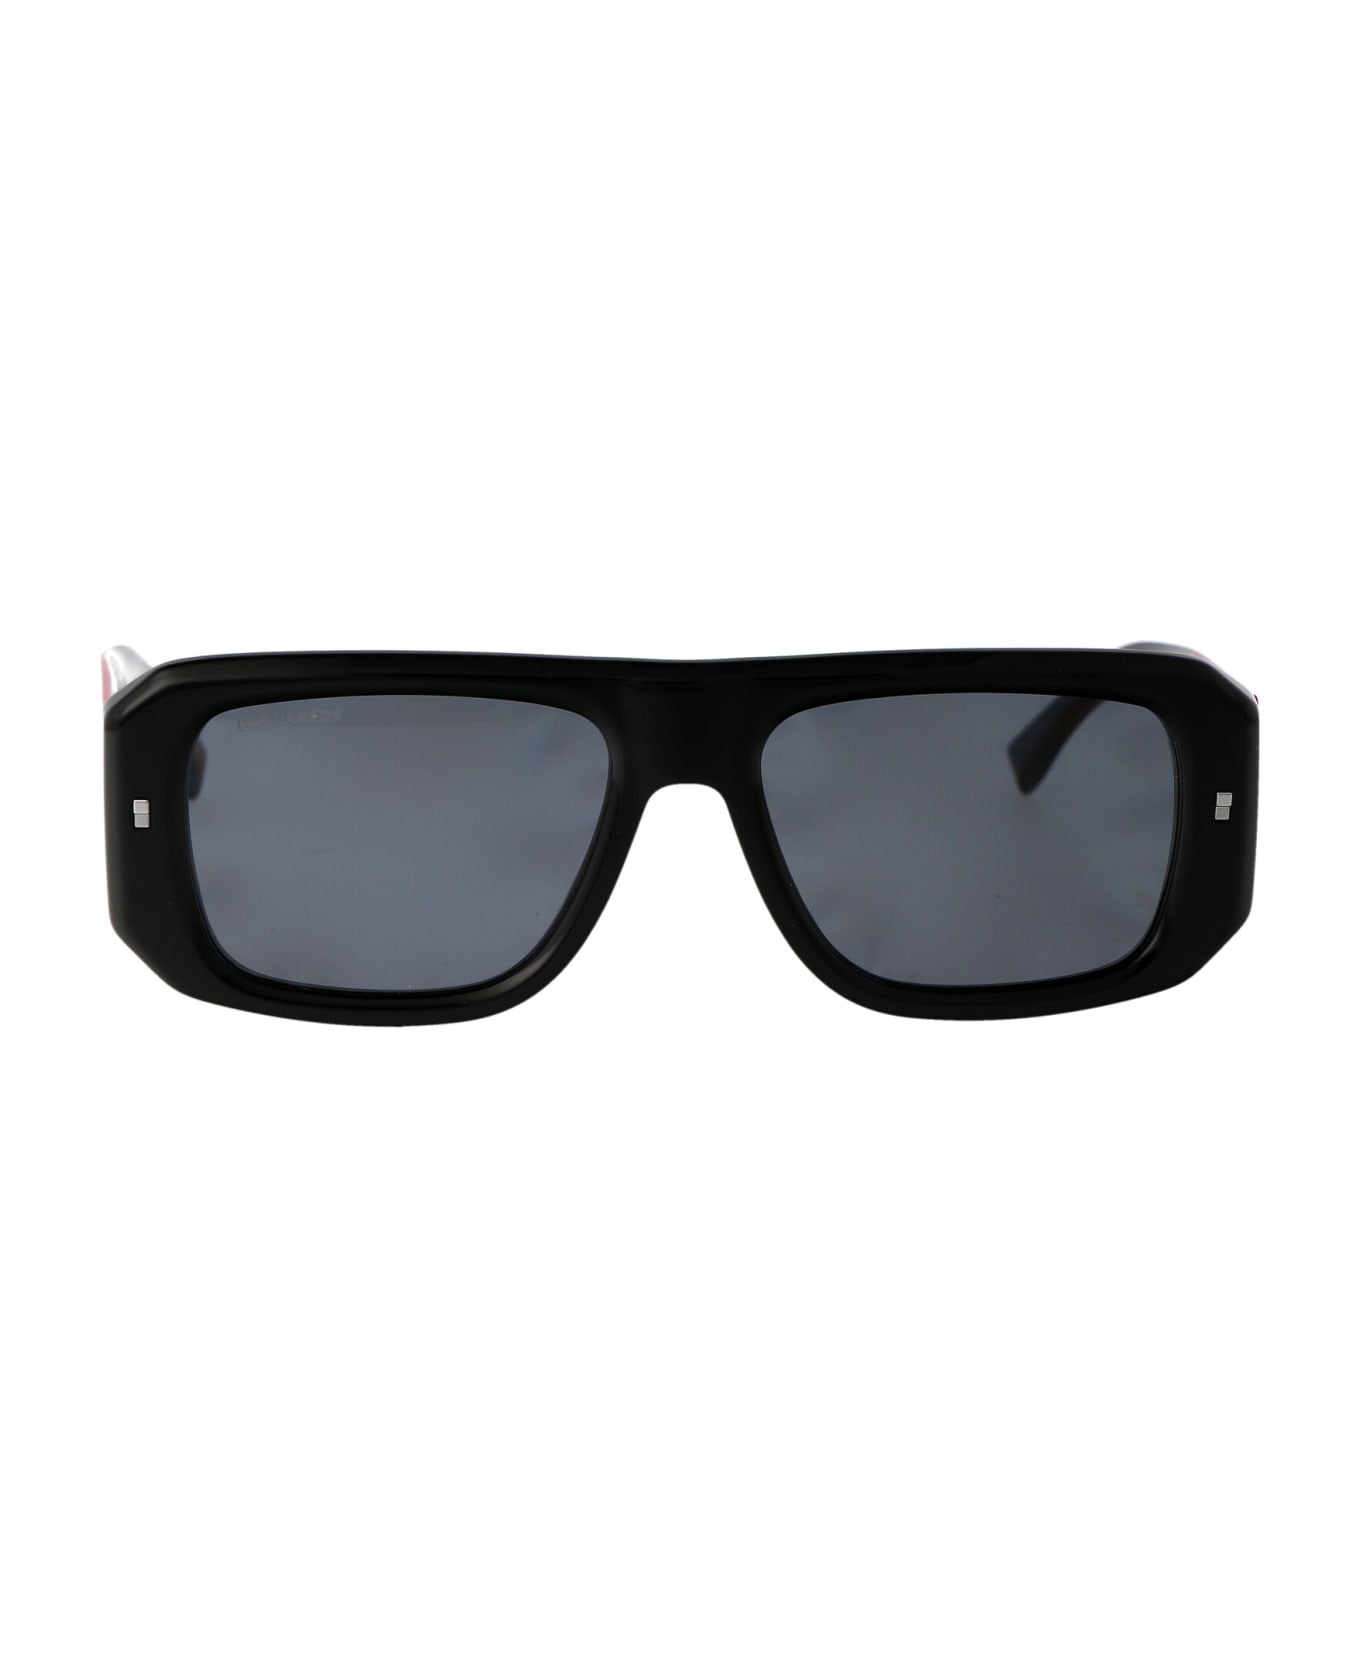 Dsquared2 Eyewear D2 0107/s Sunglasses - OITIR BLACK RED